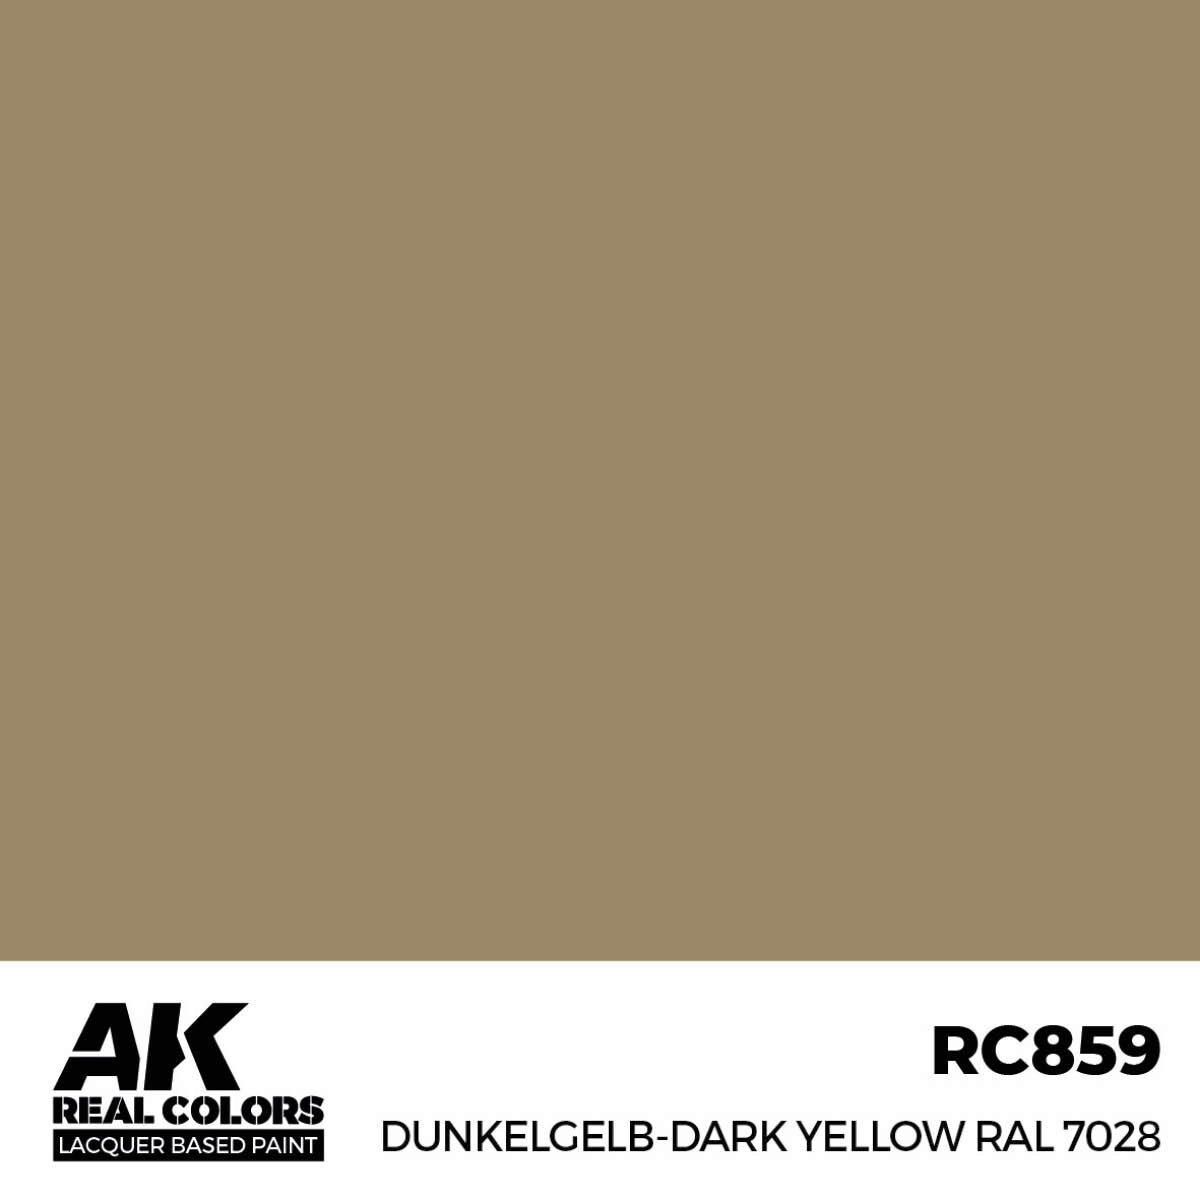 AK RC859 Real Colors Dunkelgelb-Dark Yellow RAL 7028 17 ml.